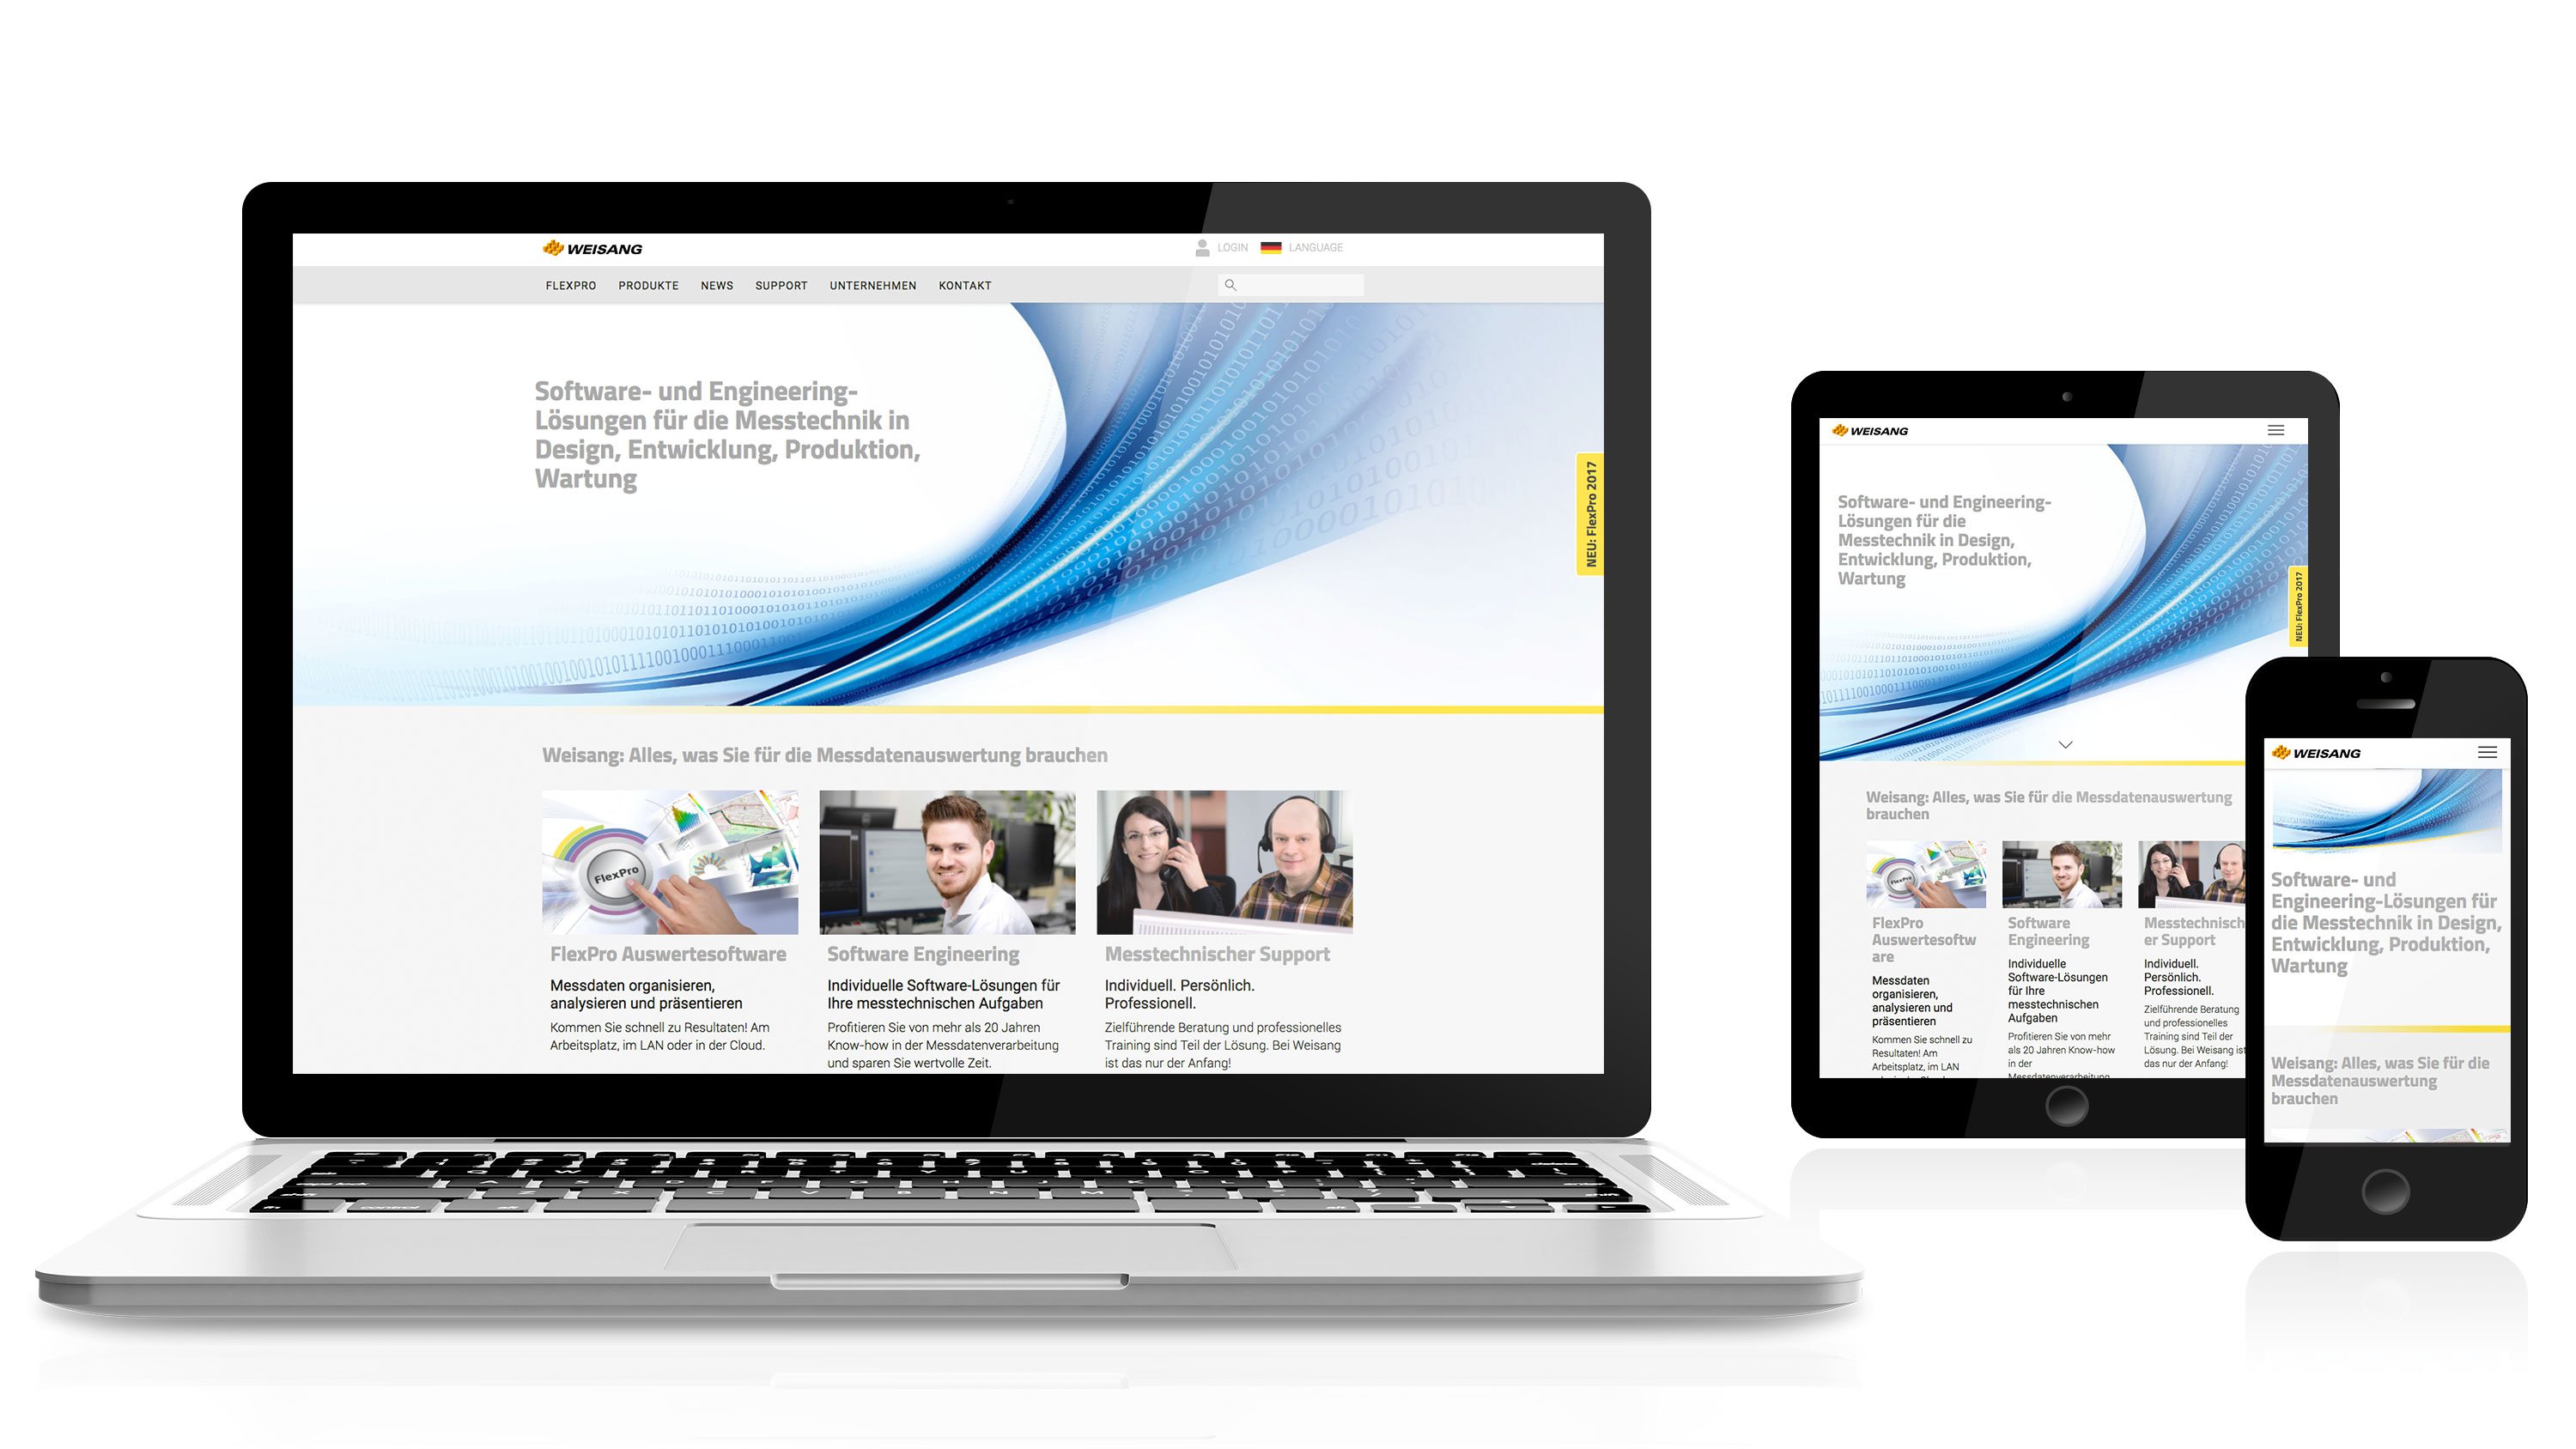 Responsive web design, brand communication for Weisang: DIE NEUDENKER® Agency, Darmstadt